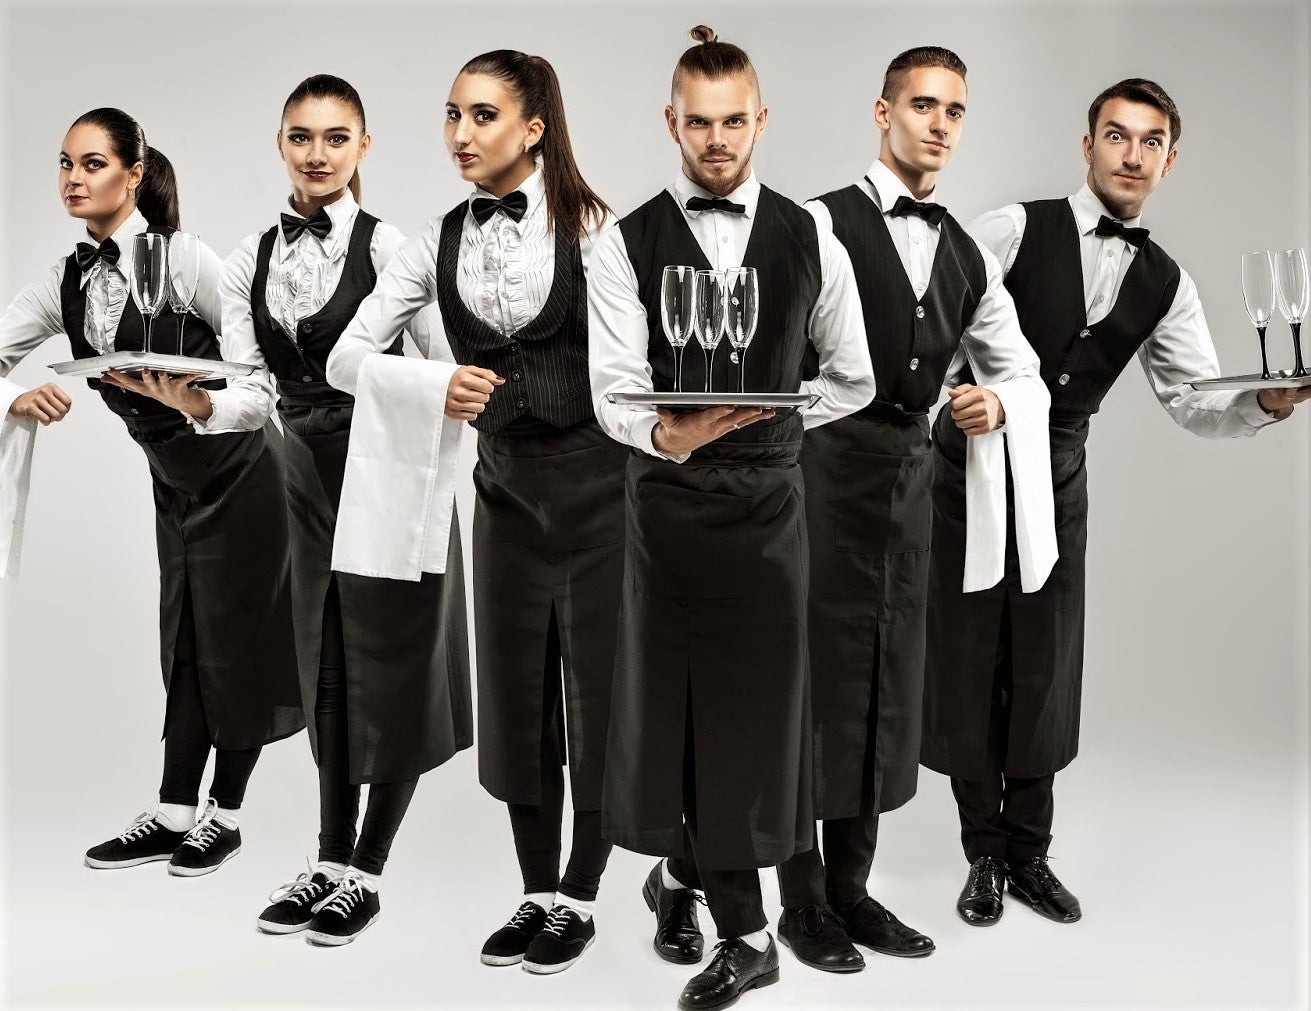 smart restaurant wait staff dressed in white shirts and black waistcoats